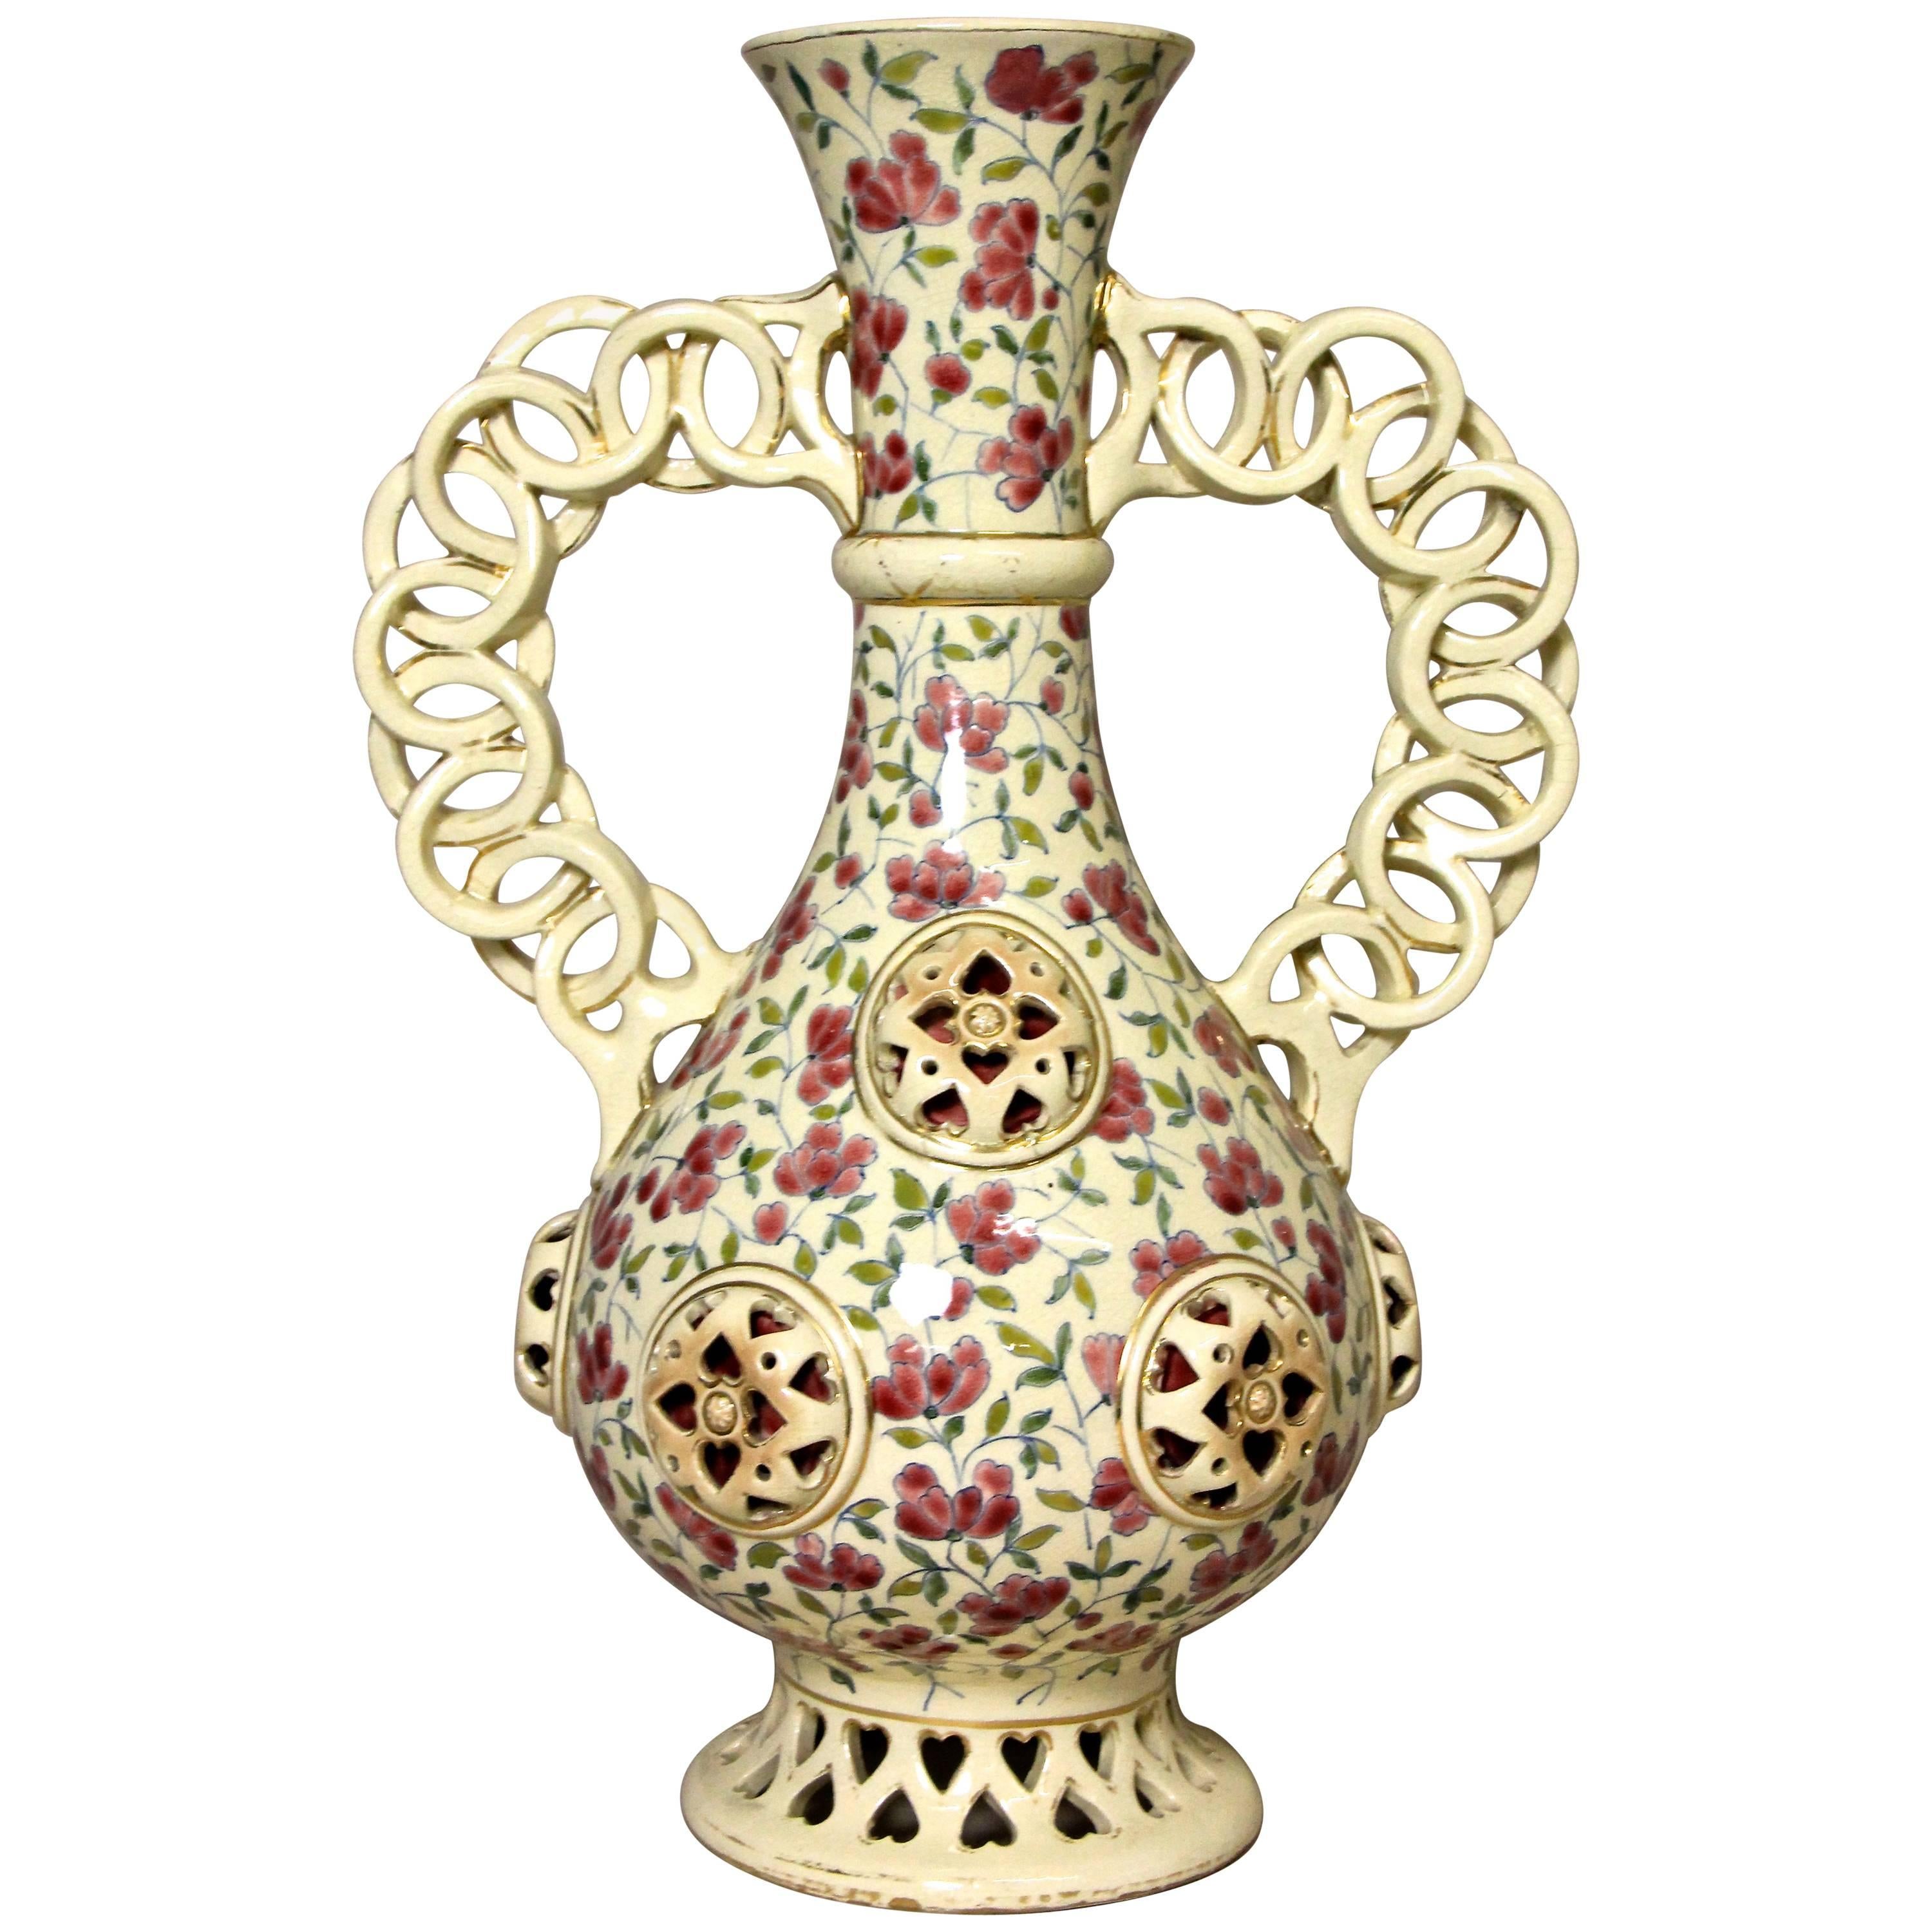 Wonderful Majolica Vase by J. Fischer, Budapest, circa 1870